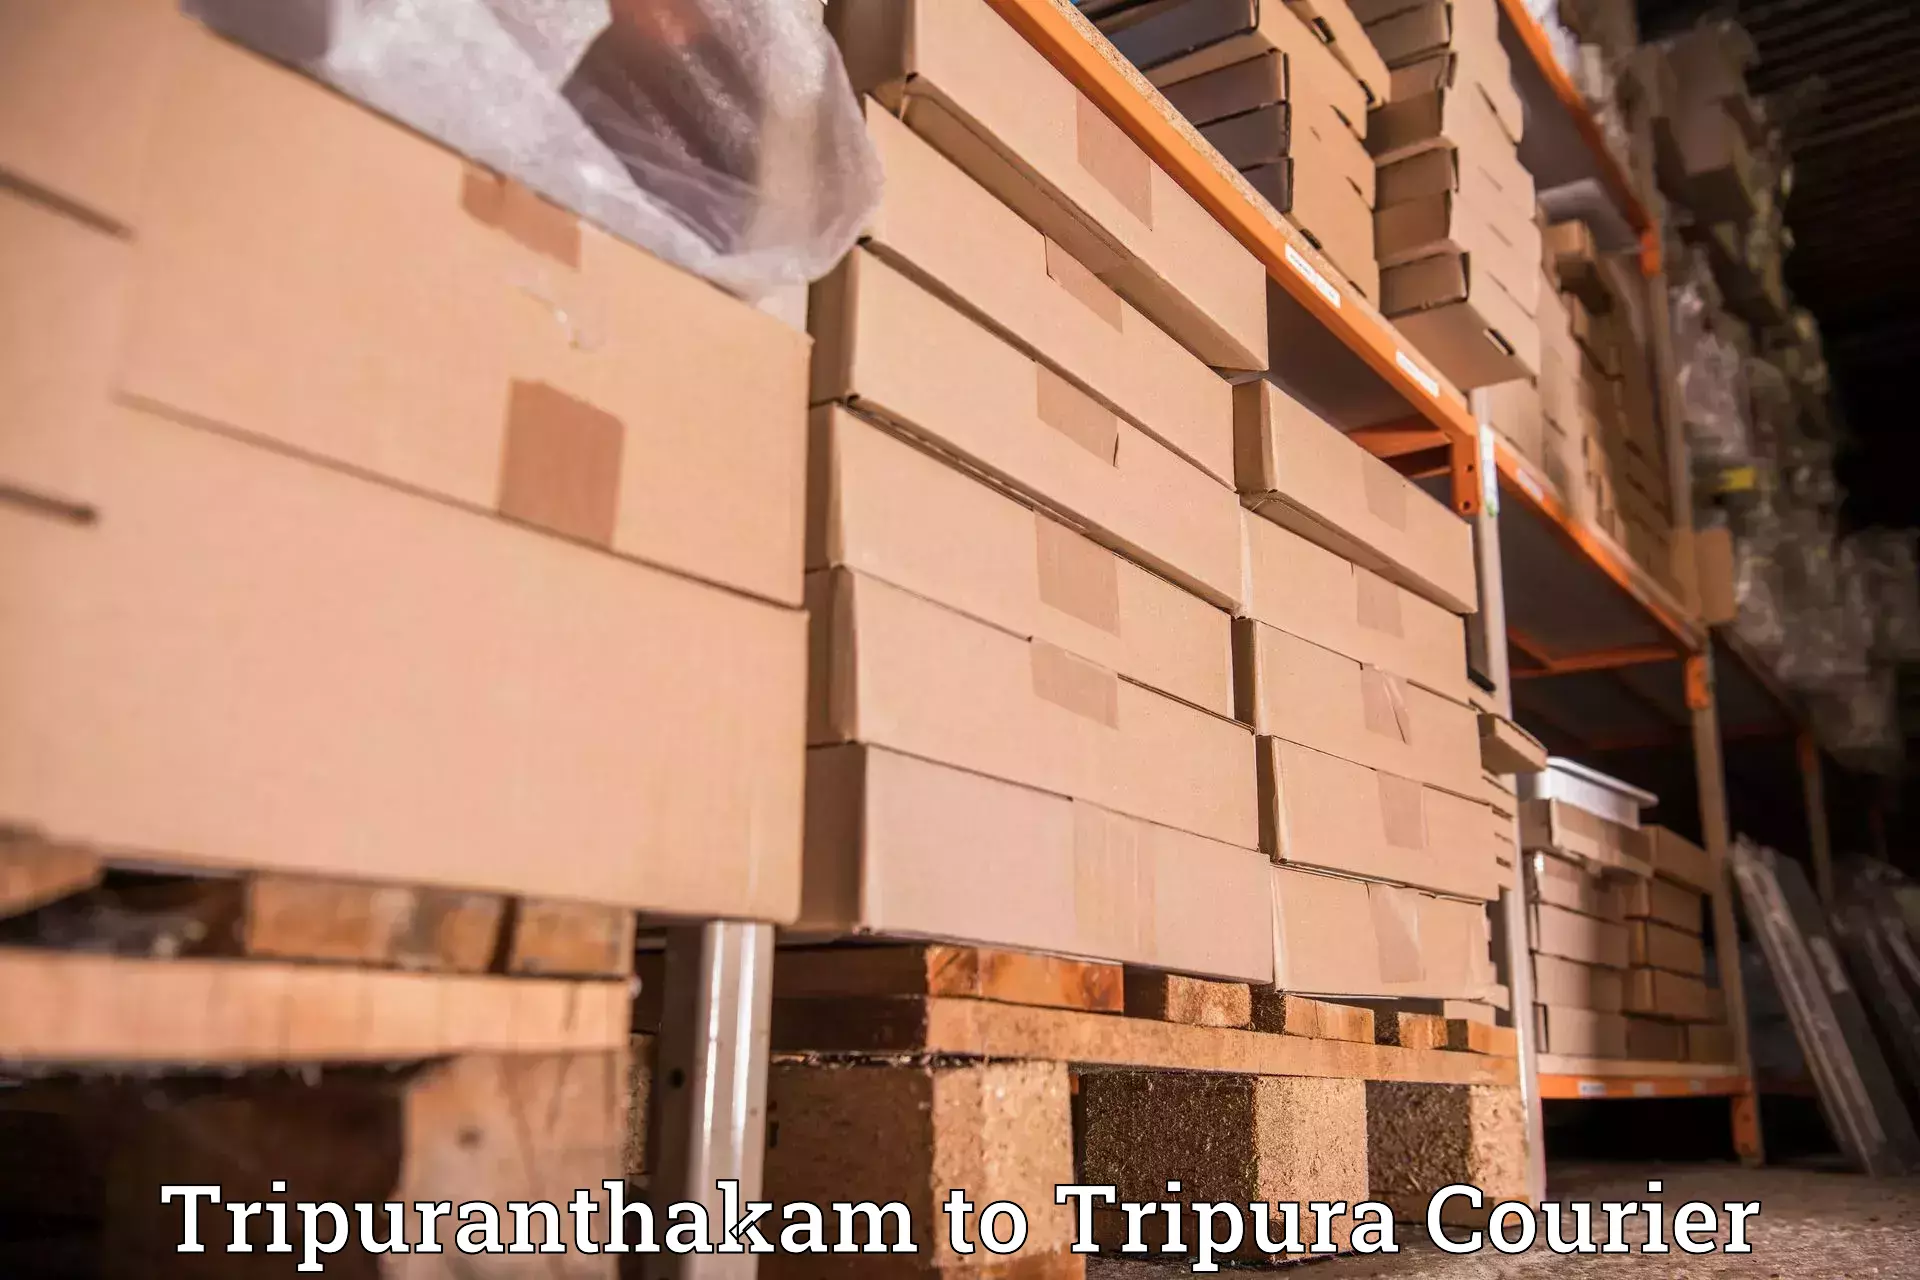 Courier service comparison Tripuranthakam to Tripura